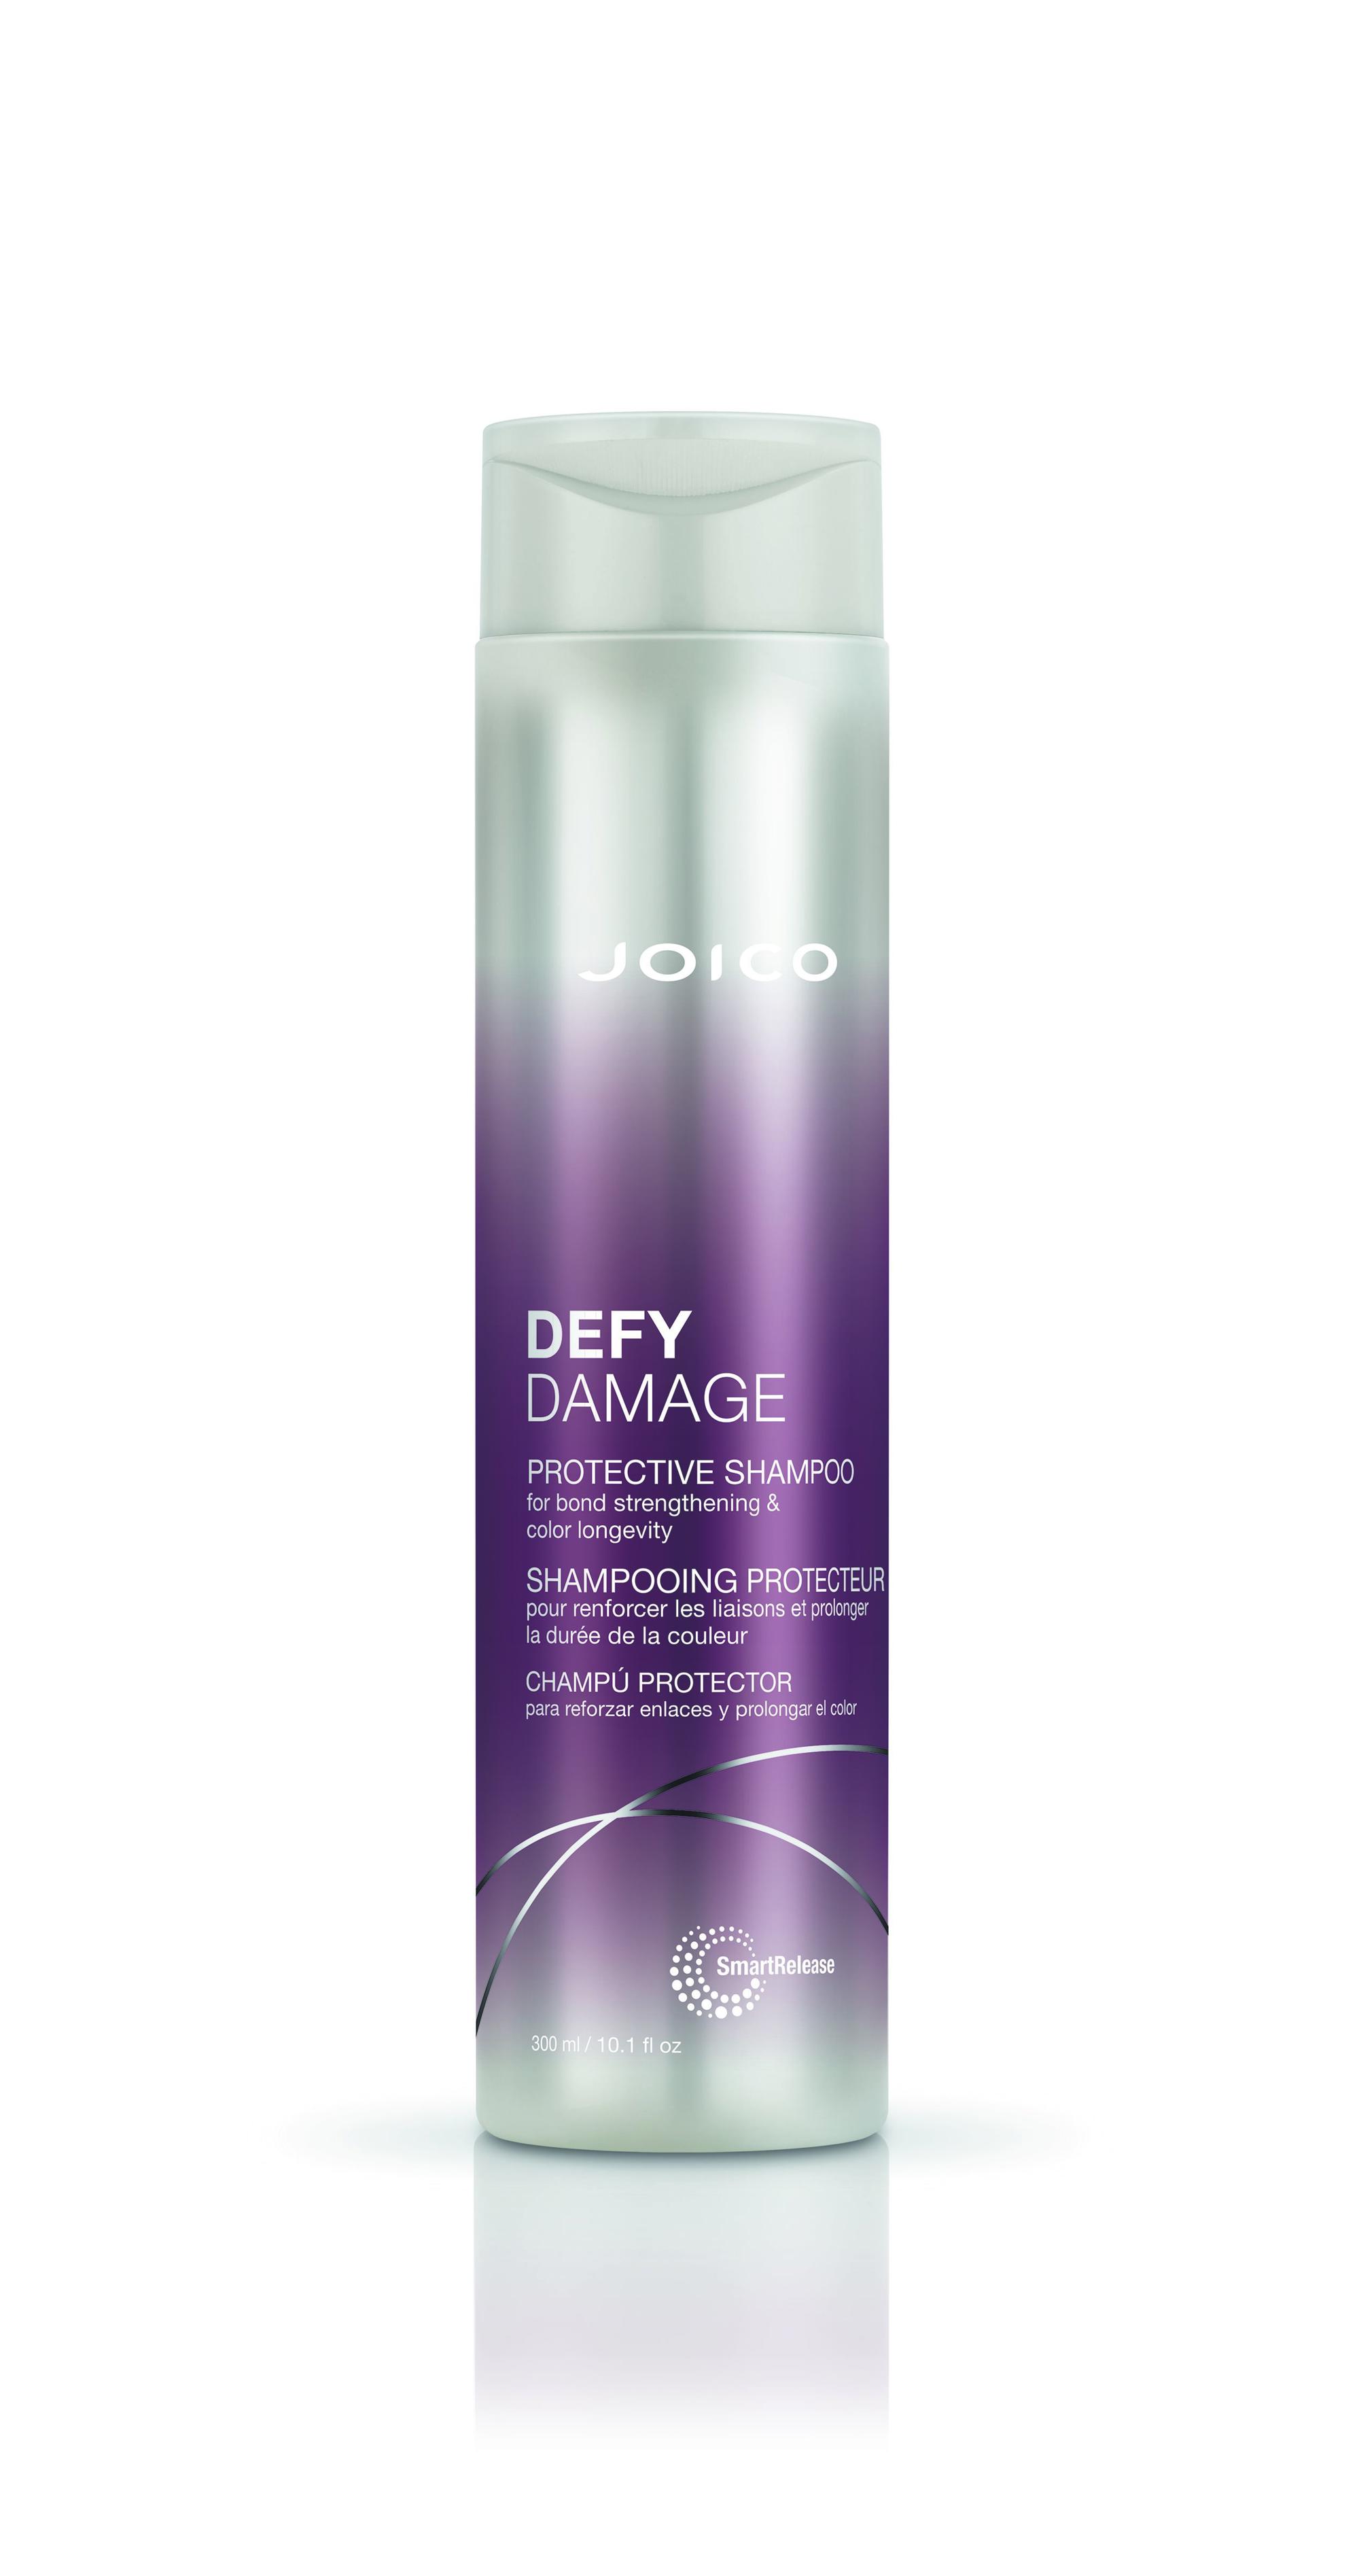 Defy Damage Protective Shampoo, de Joico